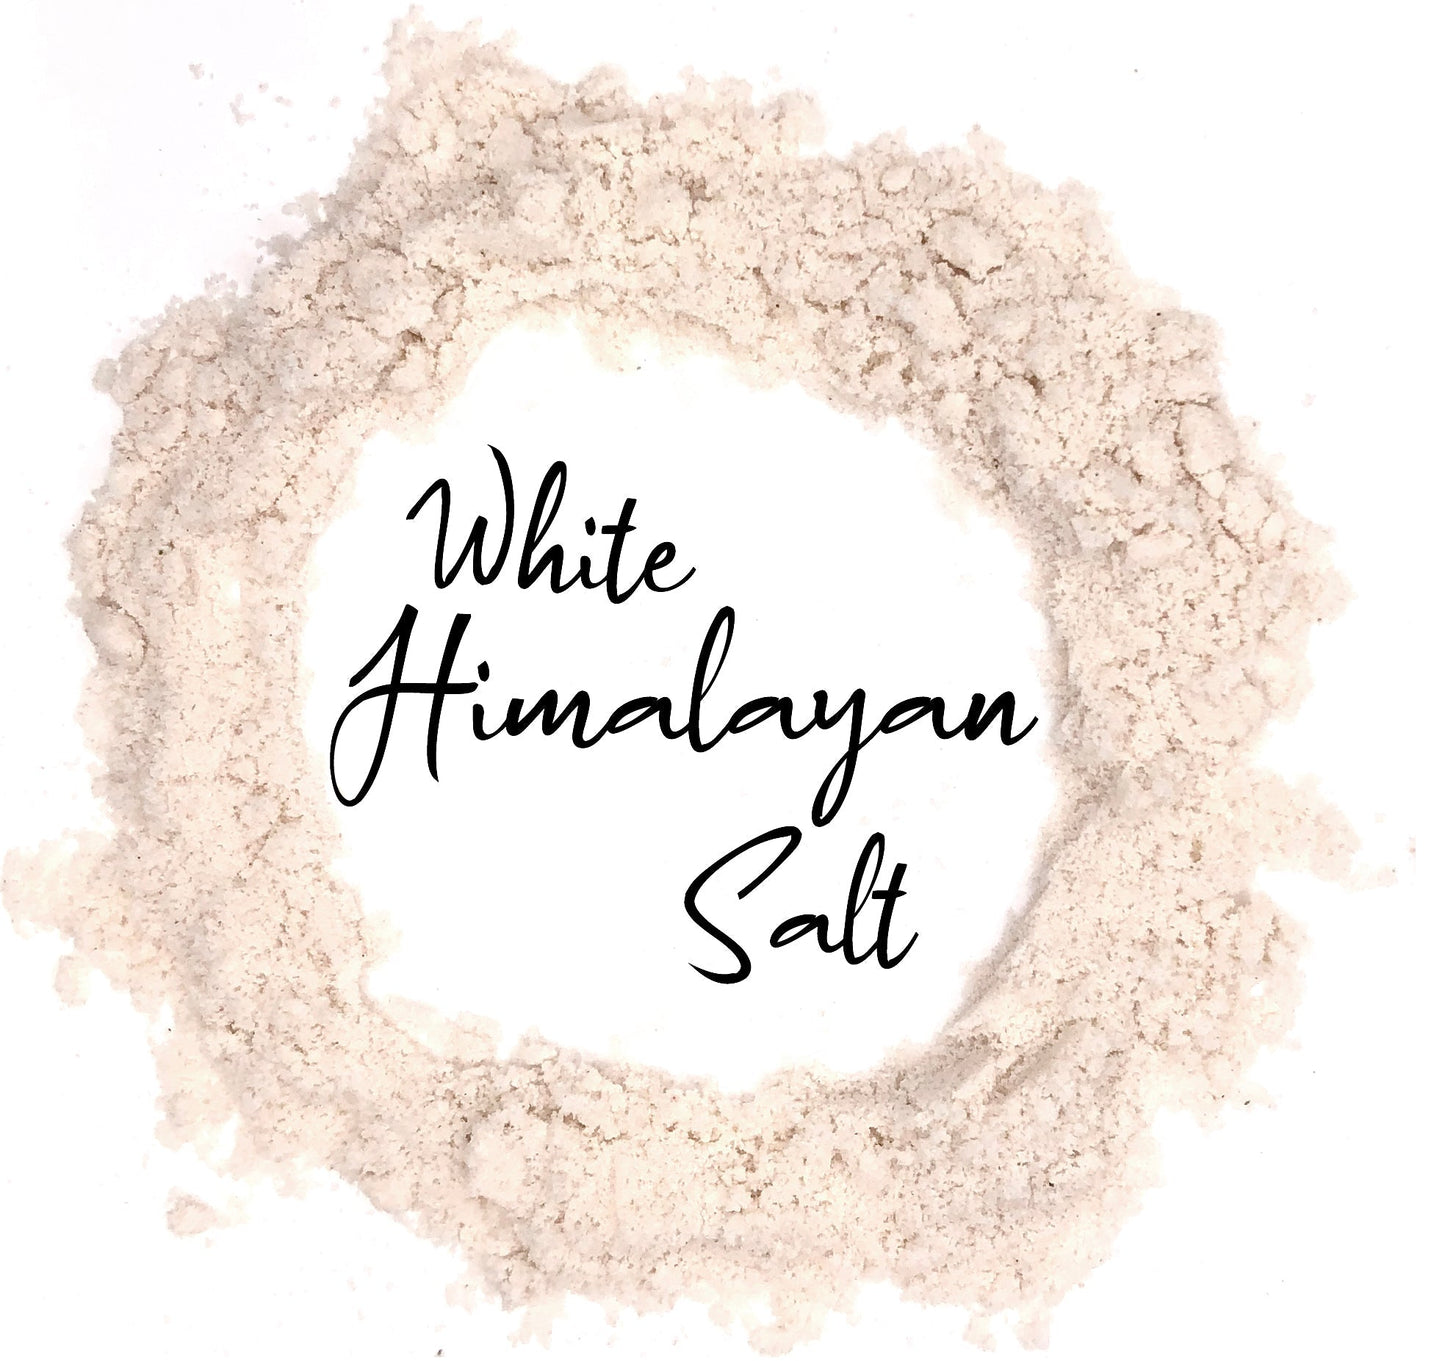 Wholesale Spices & Herbs - White Himalayan Salt, Fine Ground 1 lb (454g) Bag